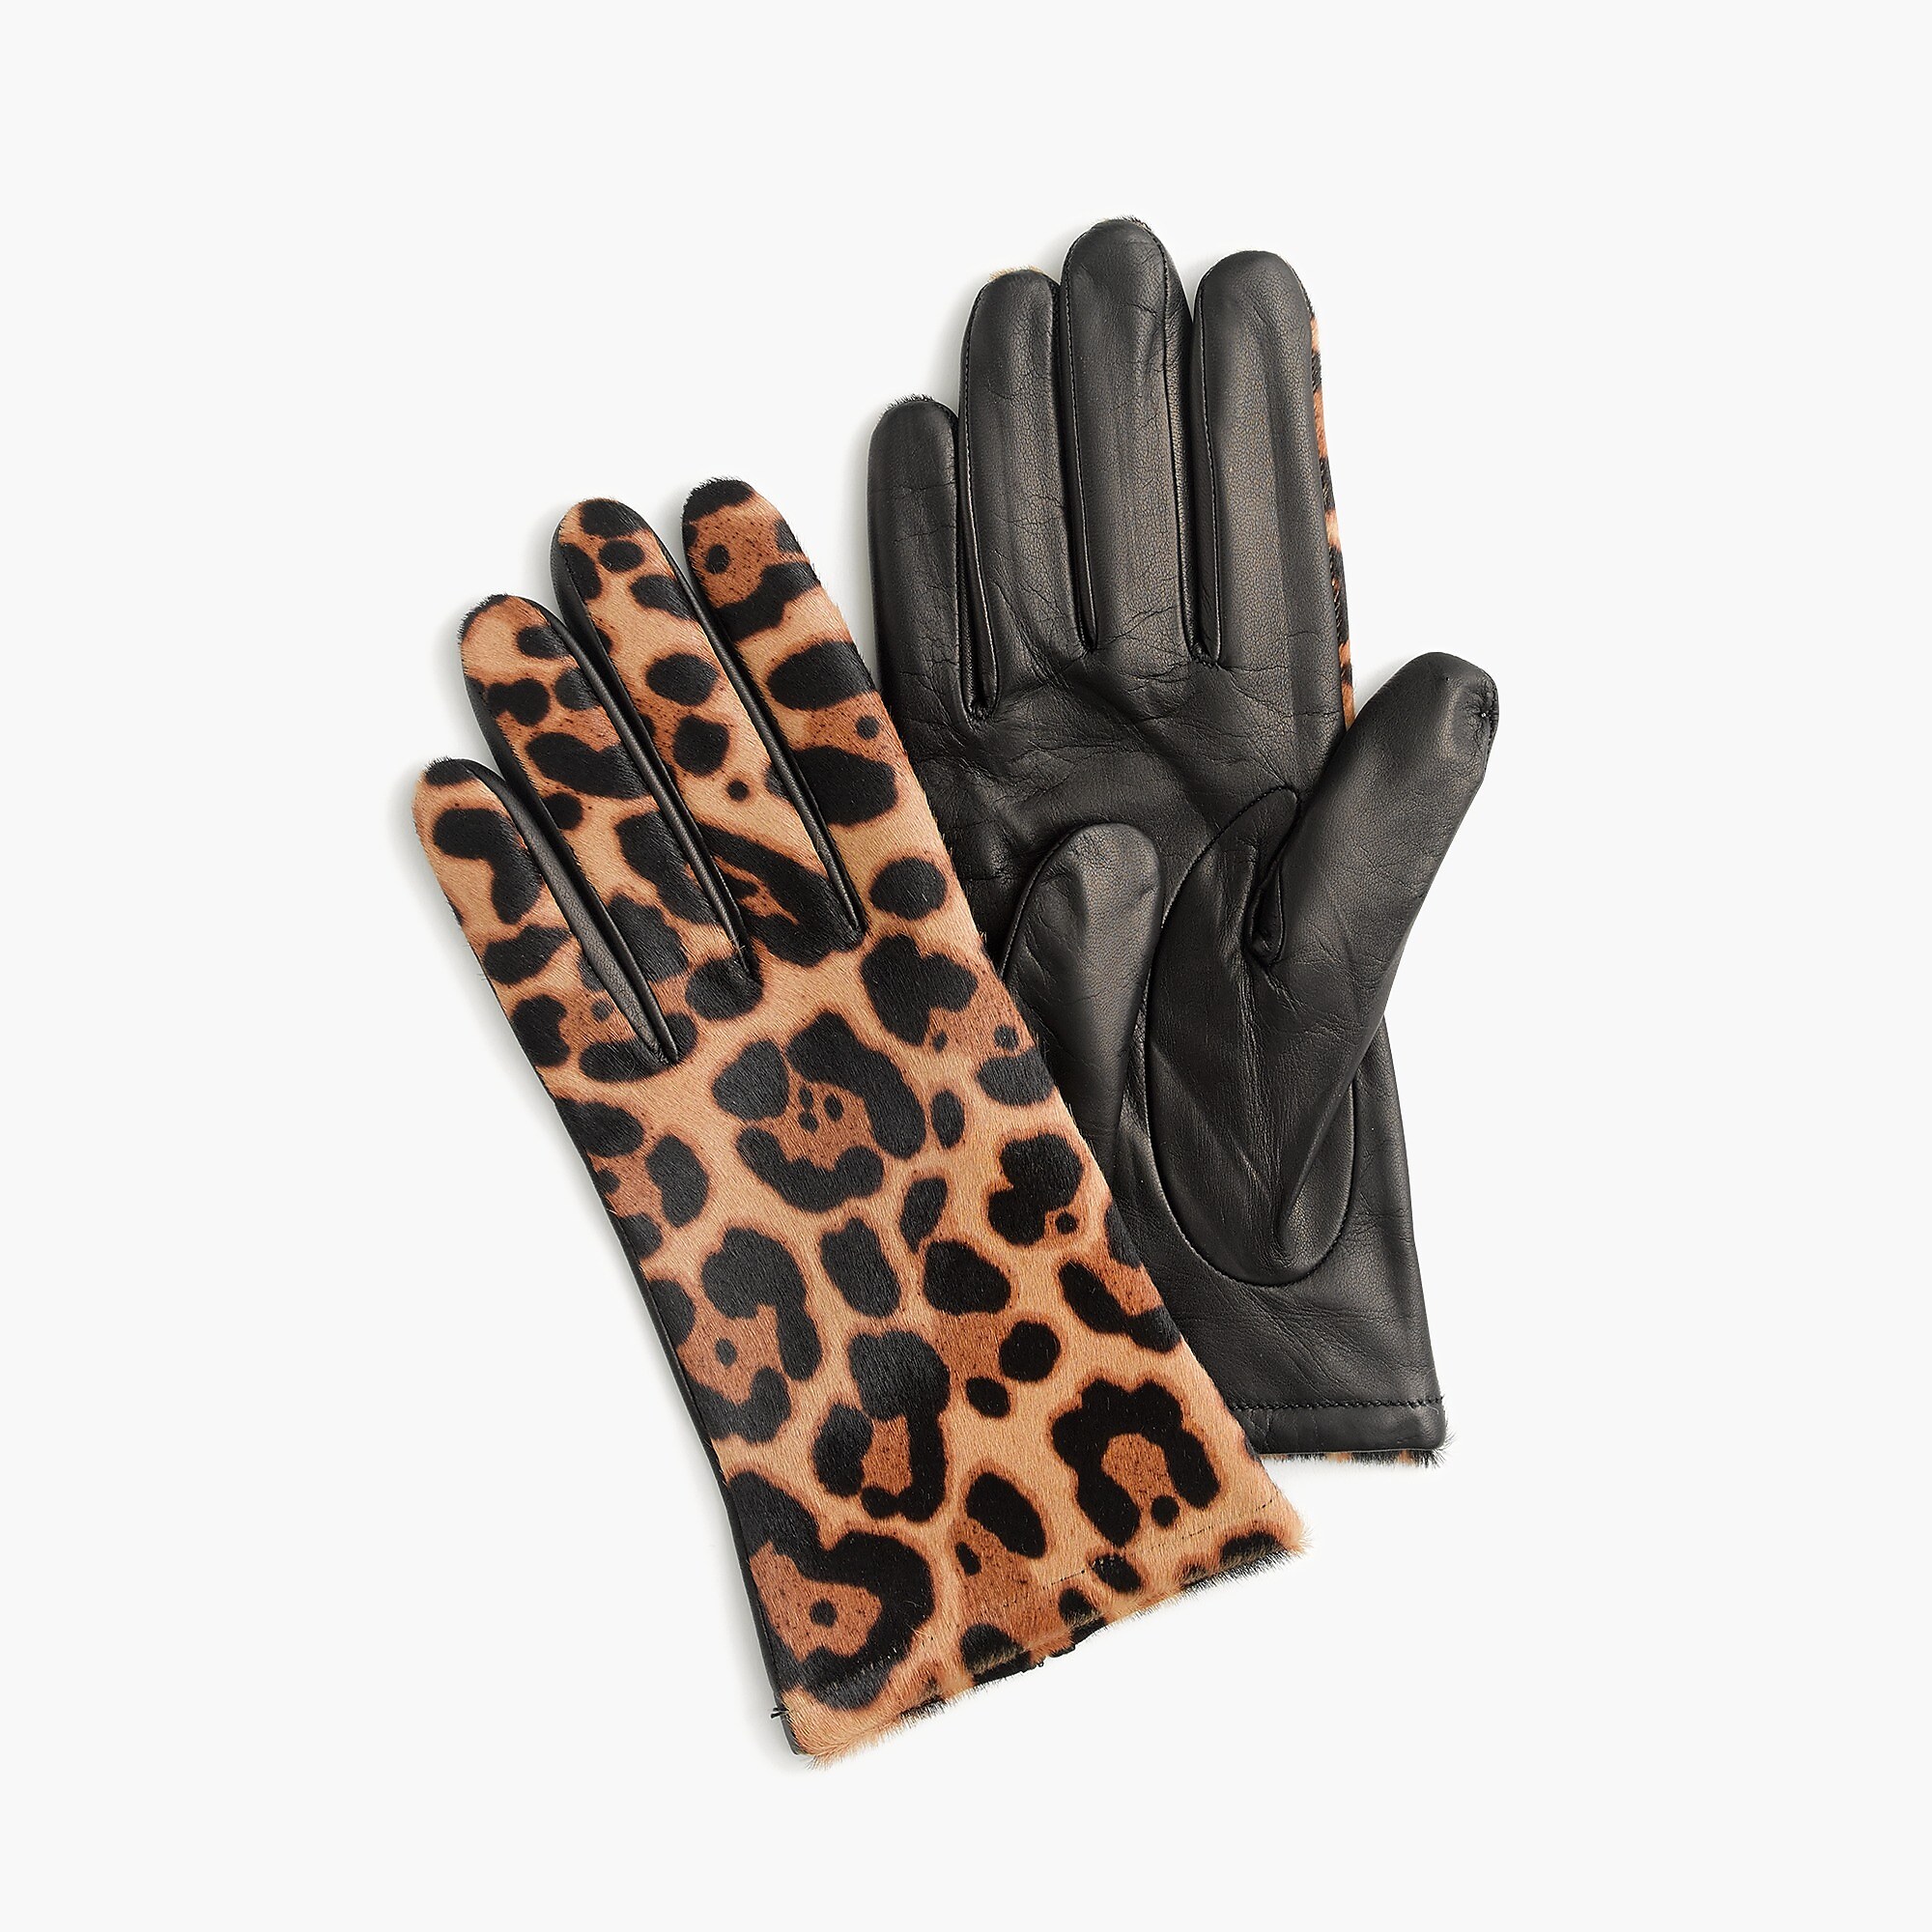 italian-calf-hair-touch-leather-tech-gloves-jcrew.